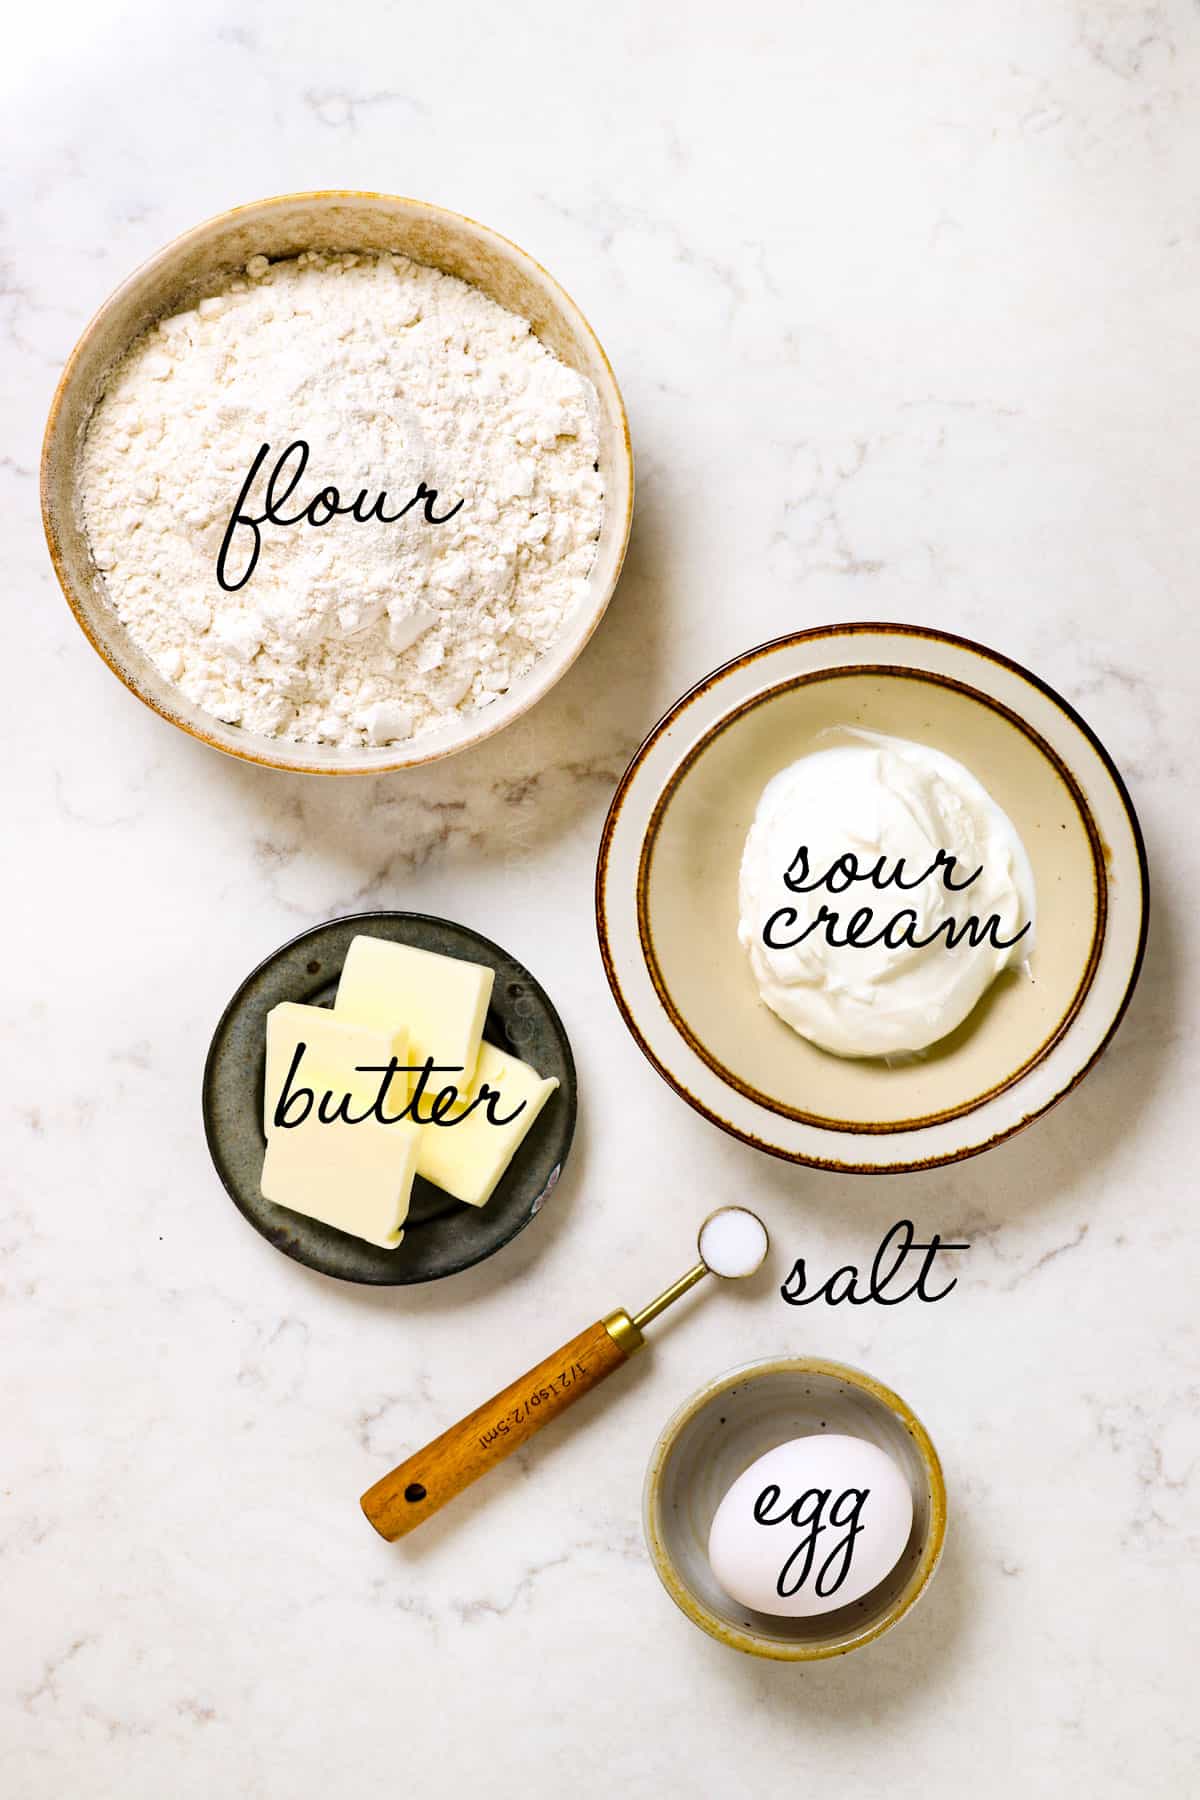 top view showing pierogi dough ingredients: flour, sour cream, butter, salt and egg